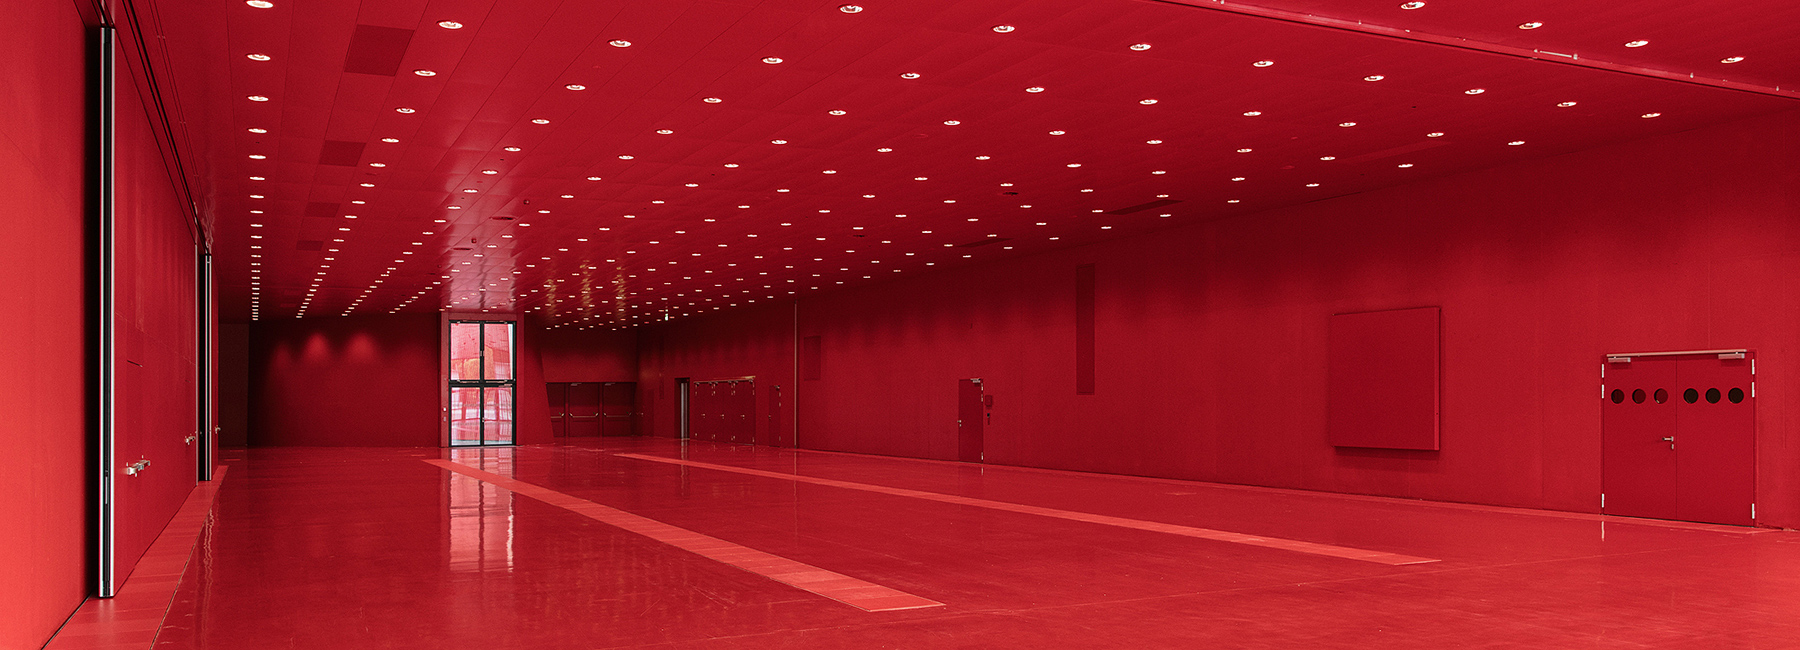 Marte Marte Dornbirn Exhibition Hall Shows Dramatic Red And